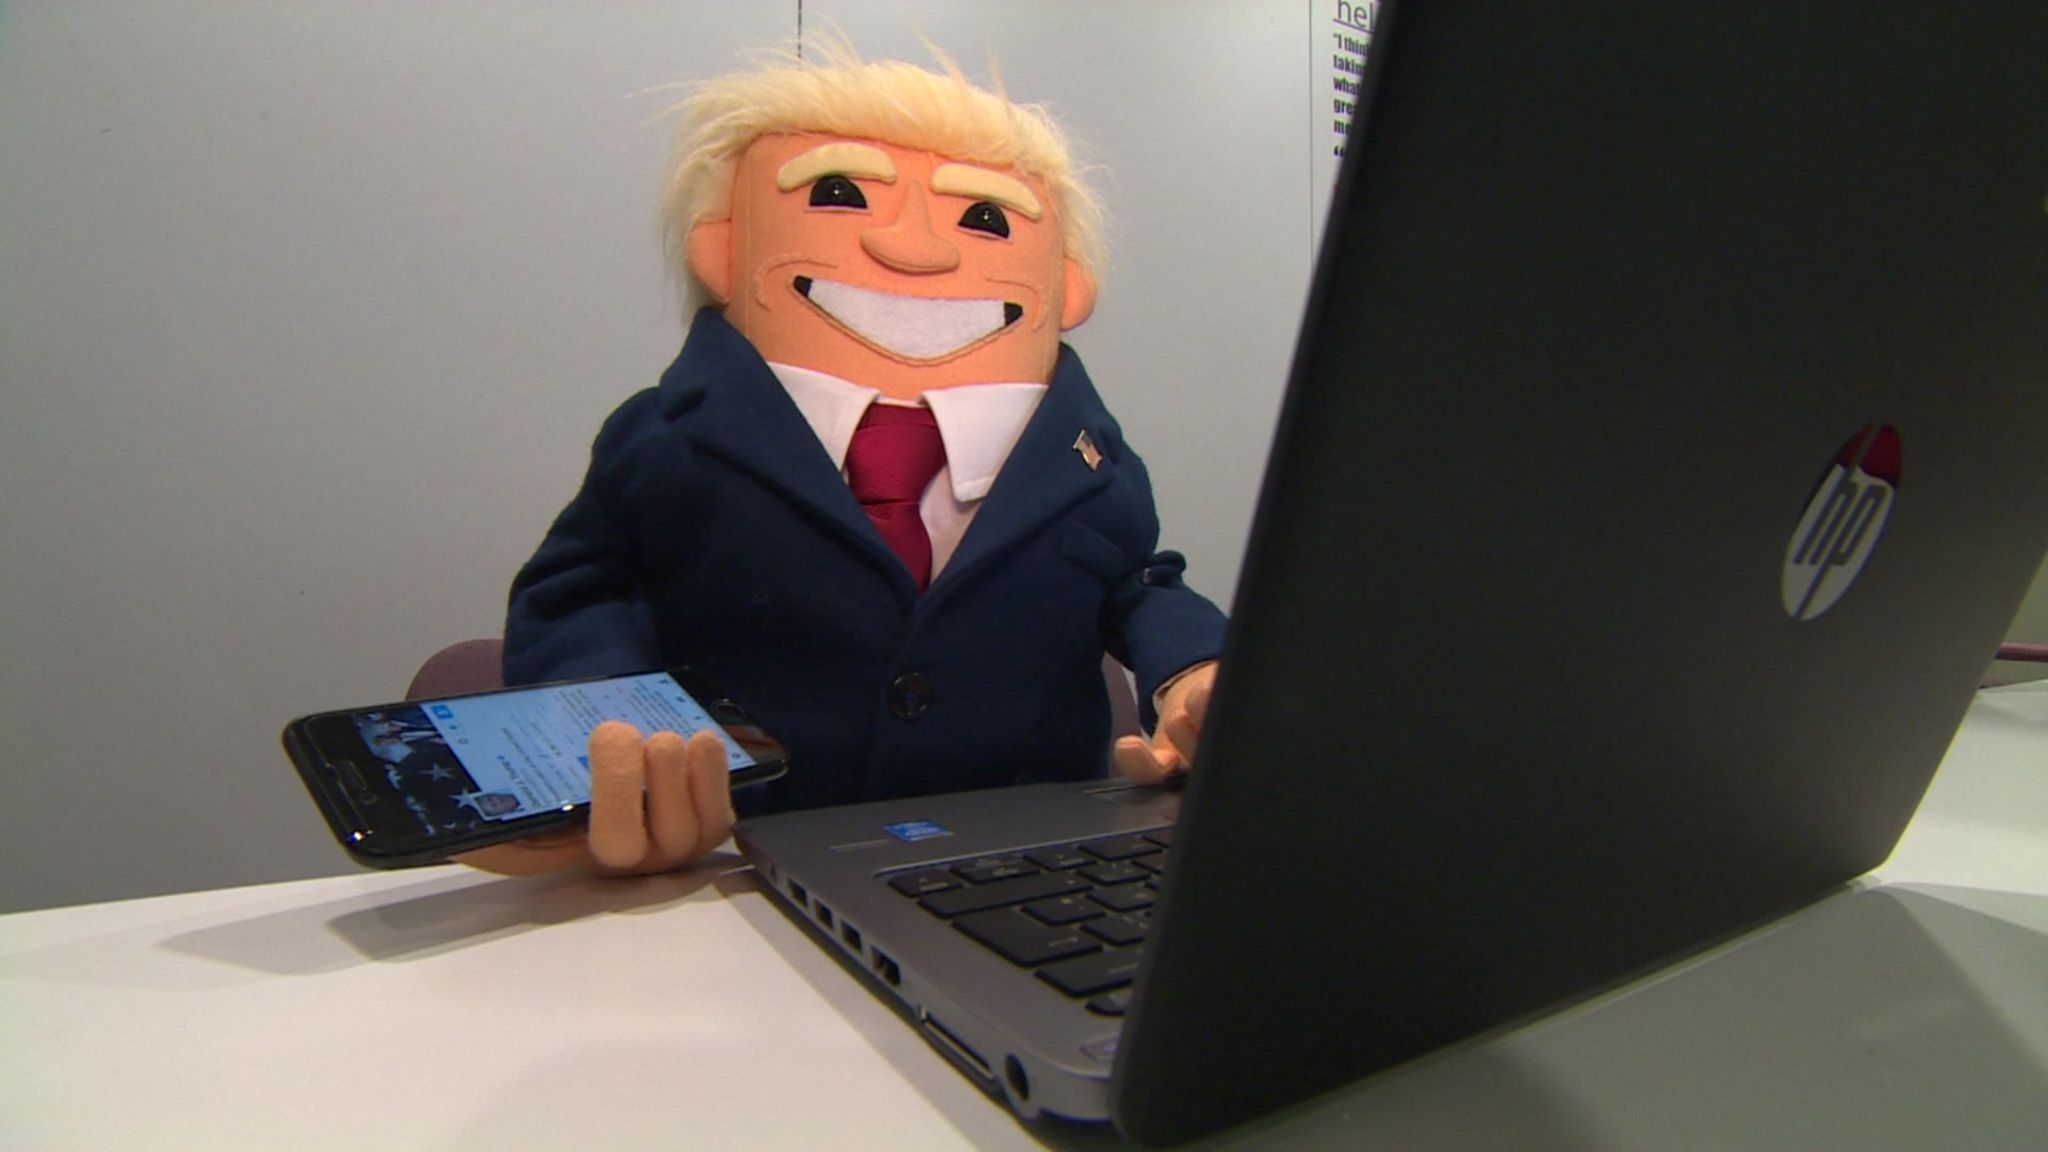 Donald Trump puppet